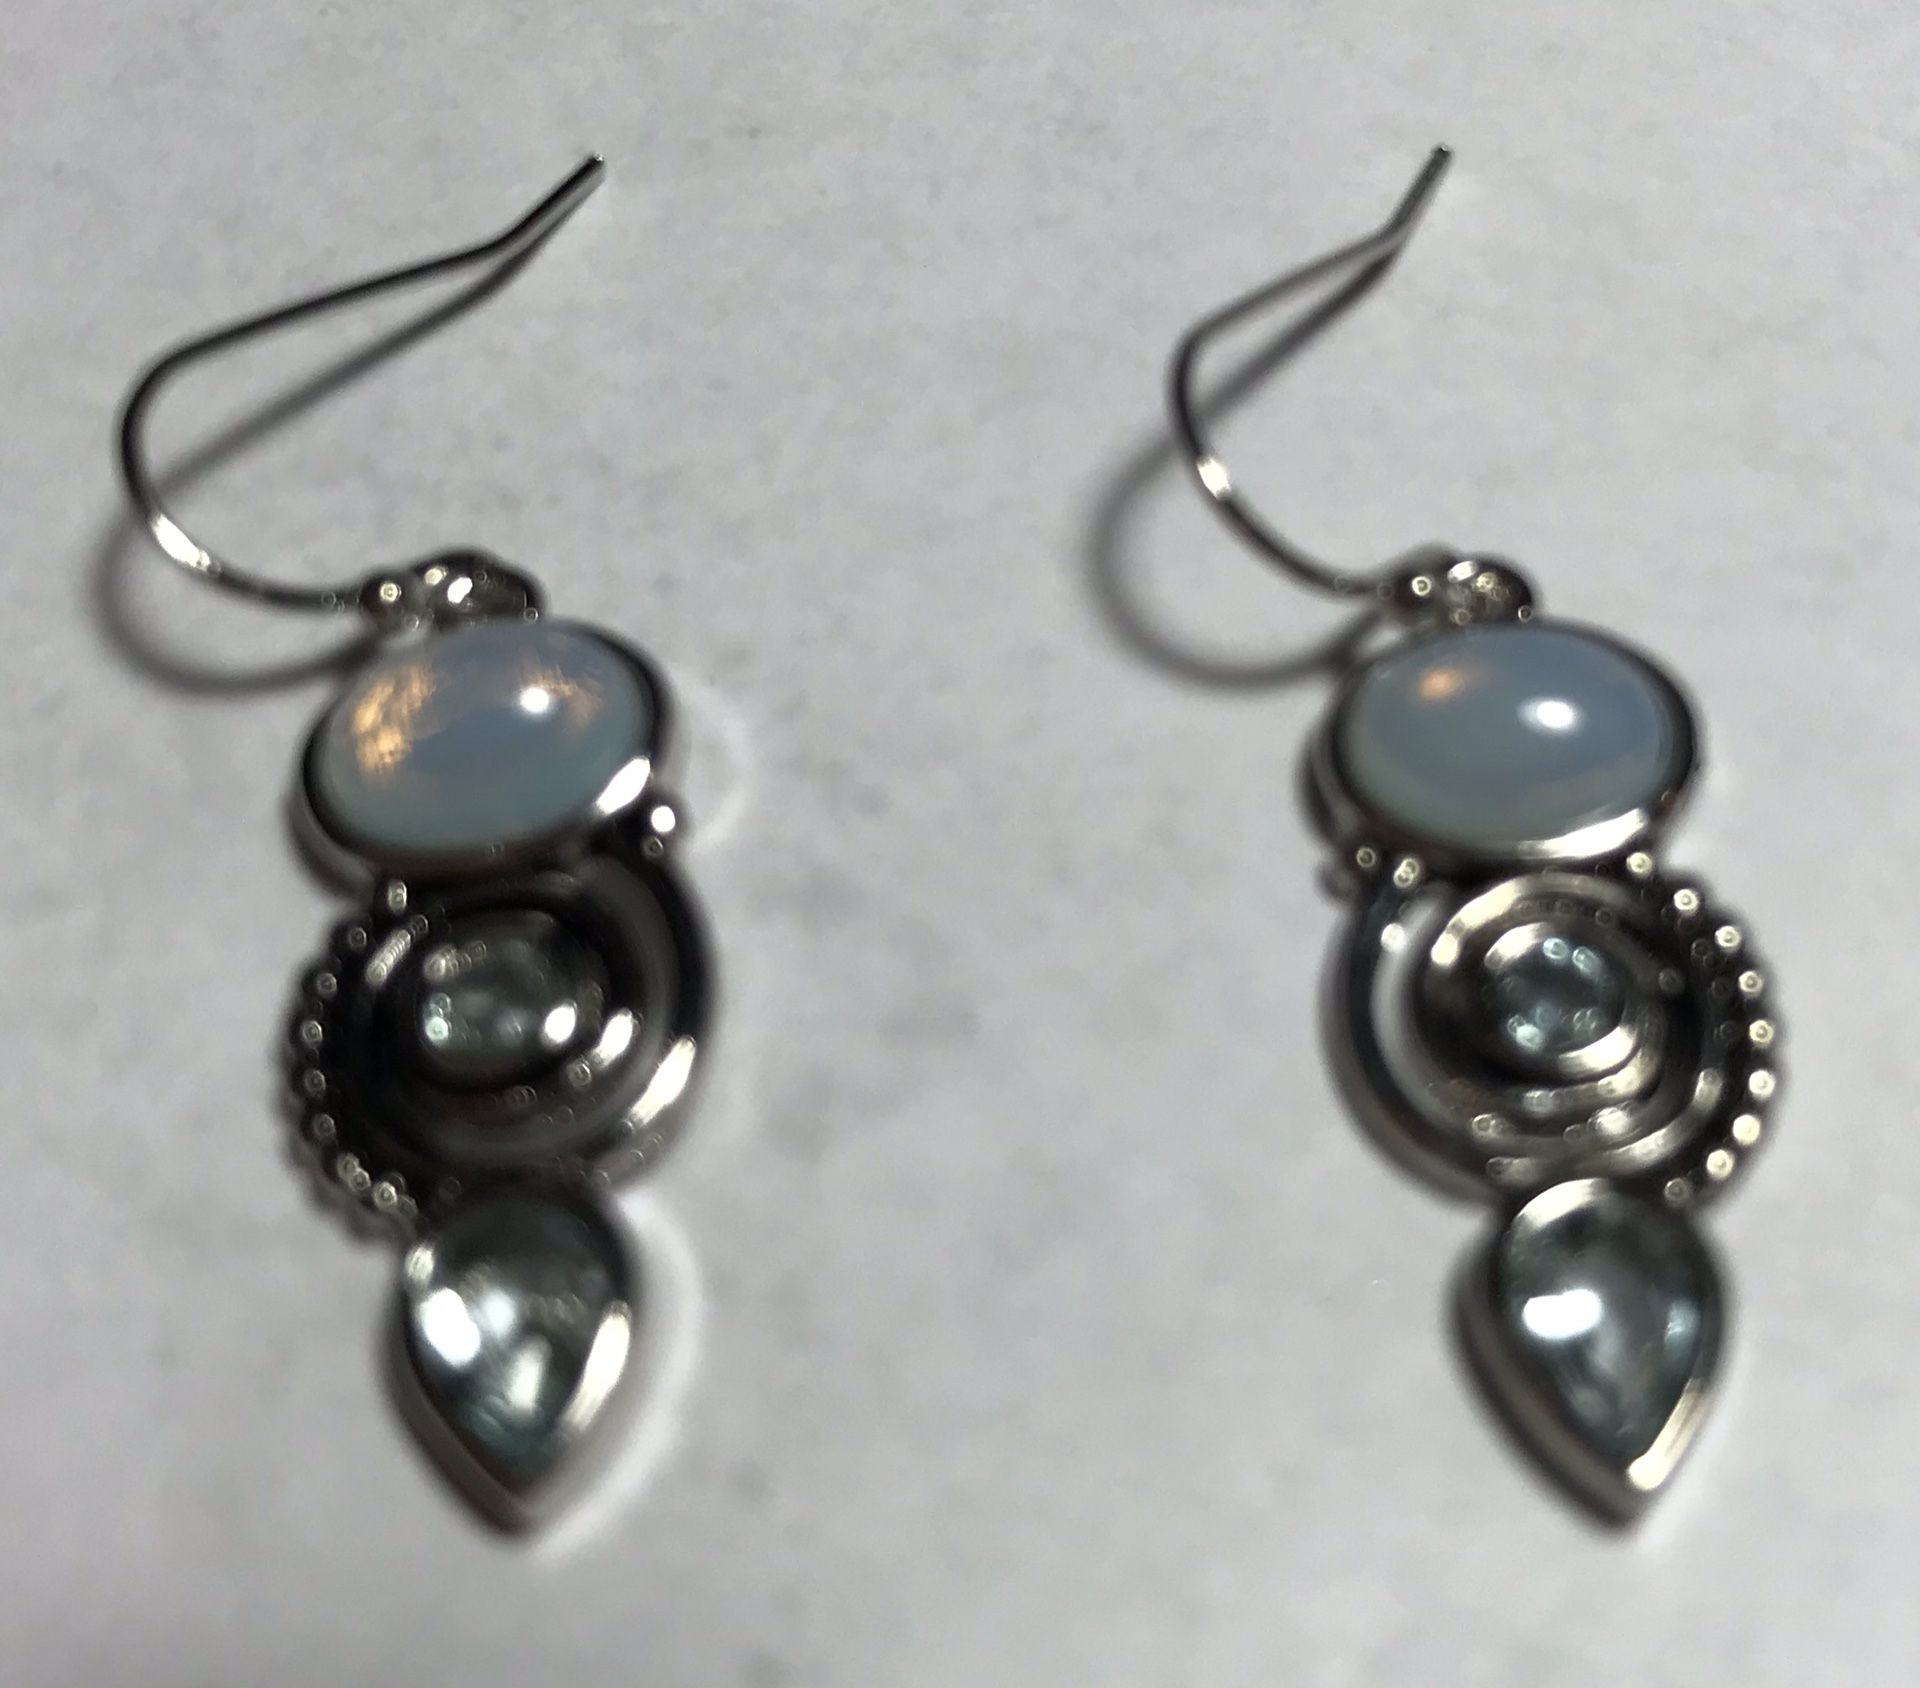 Moonstone Silver Earrings